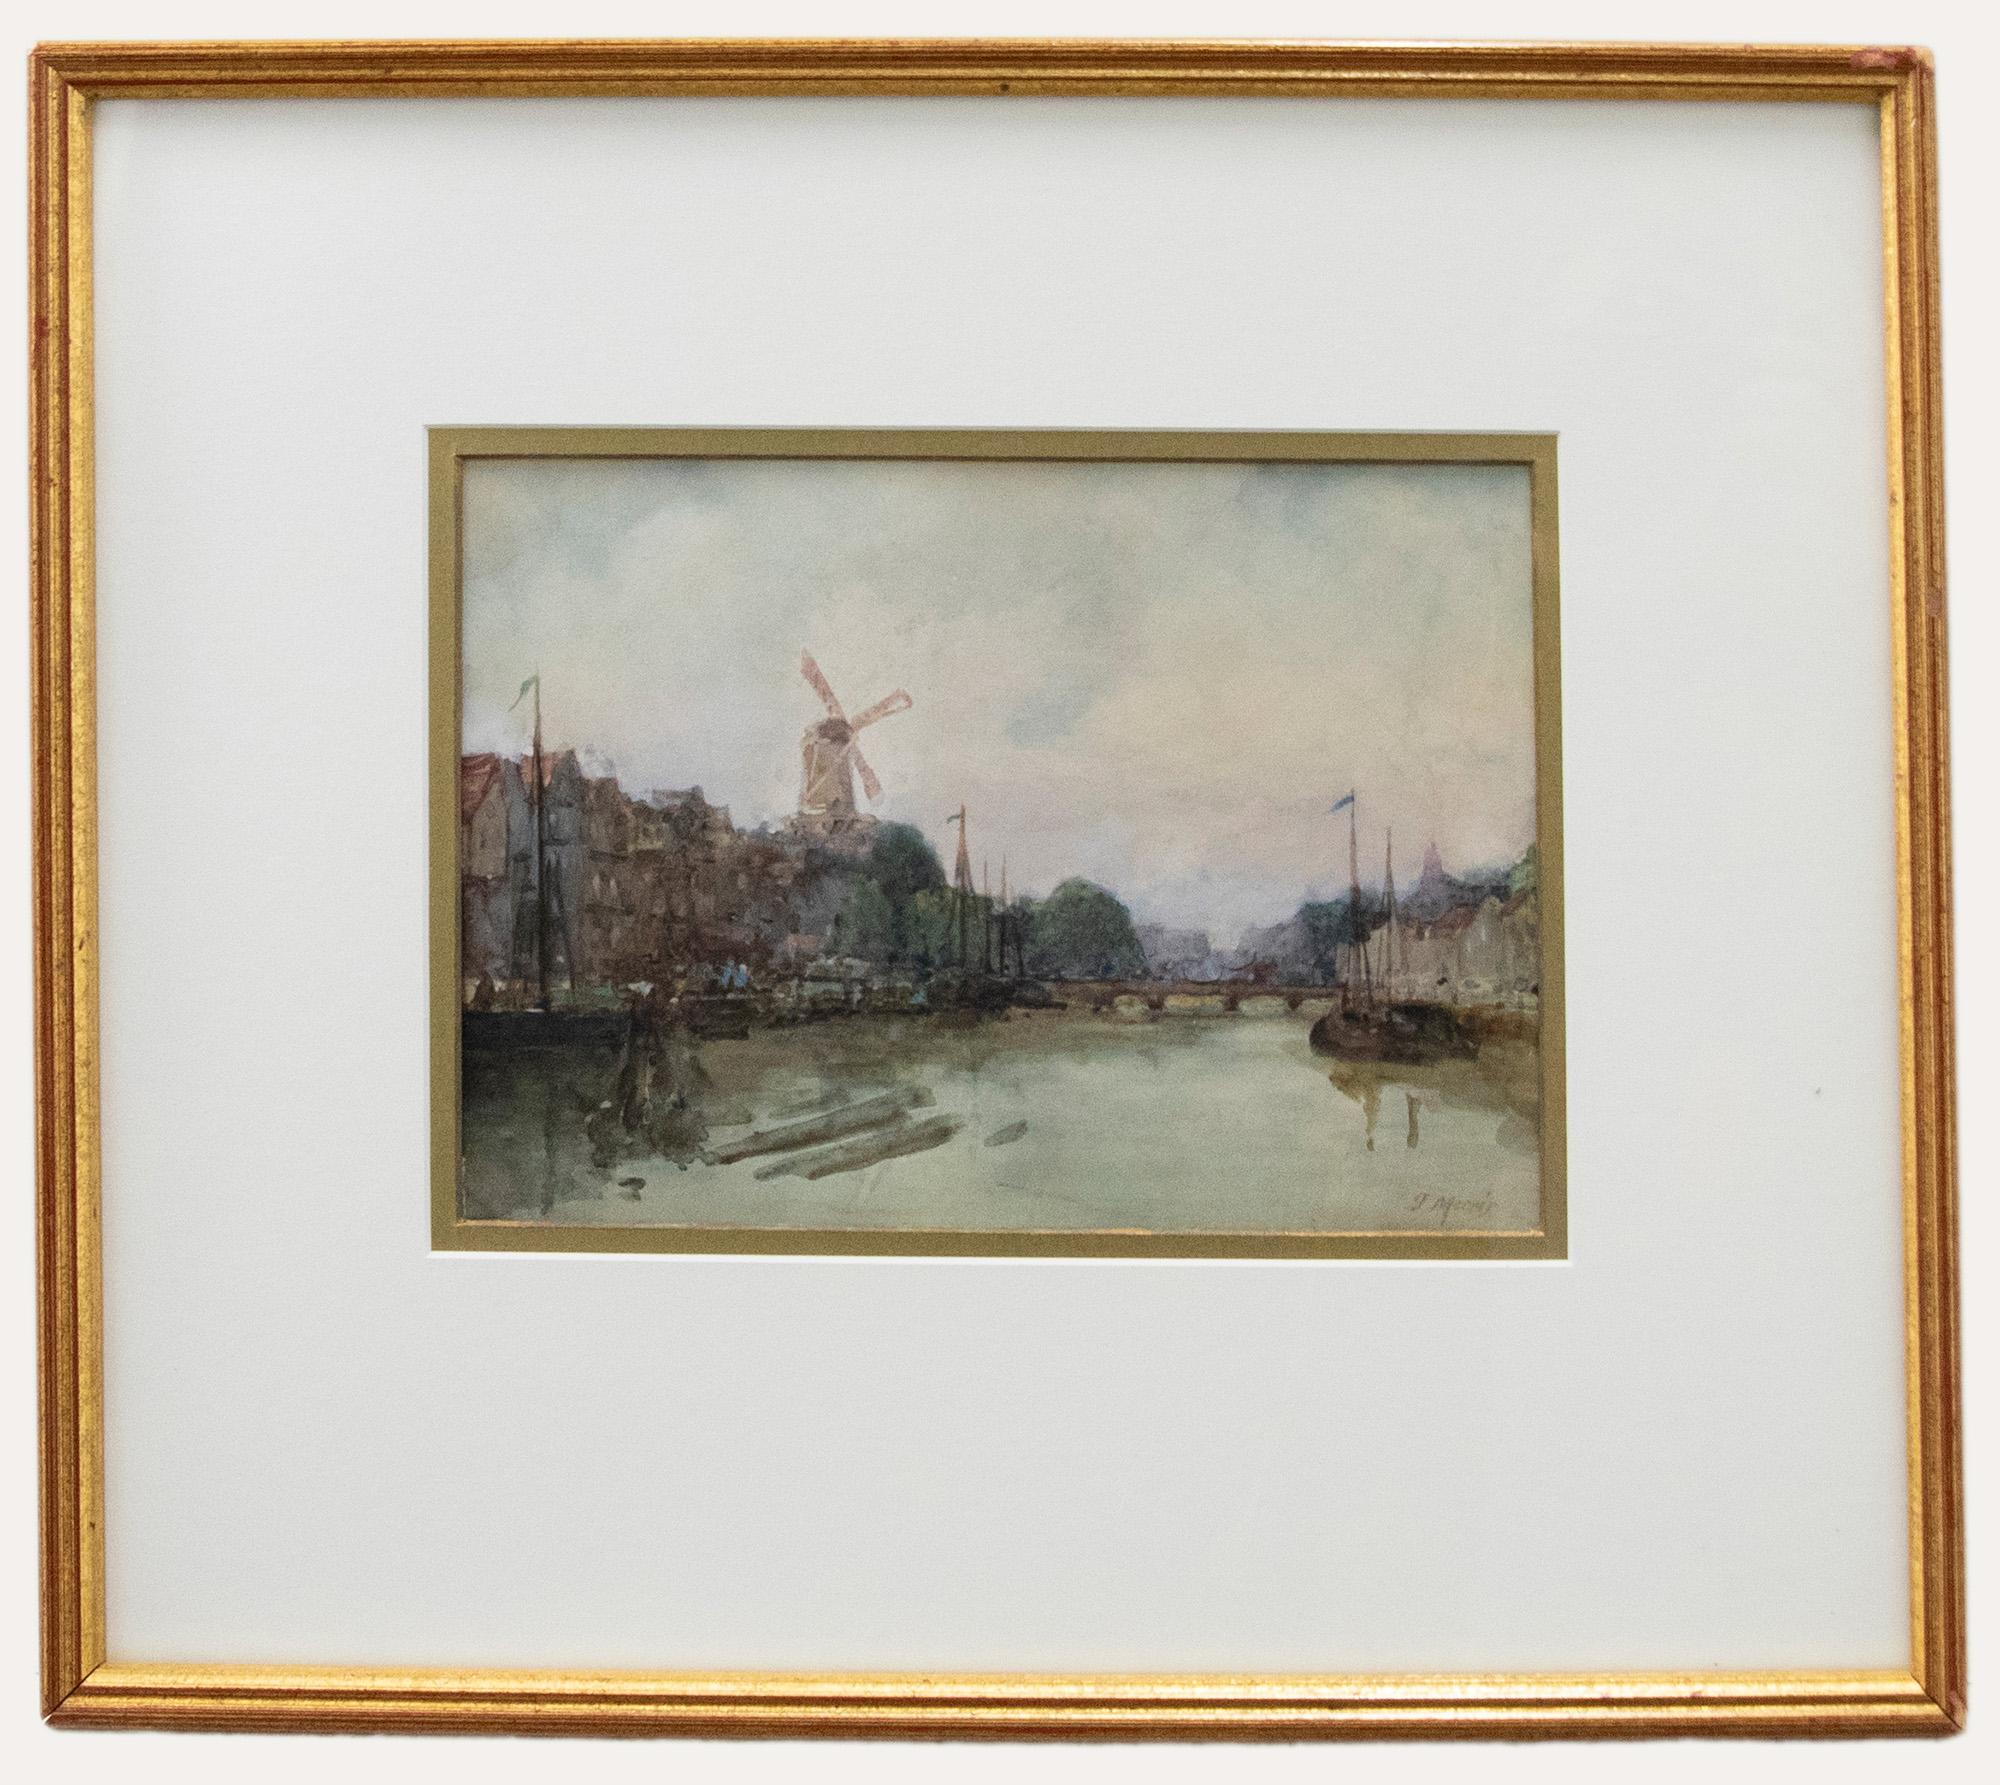 Unknown Landscape Art - J. Morris - Framed Early 20th Century Watercolour, Amsterdam